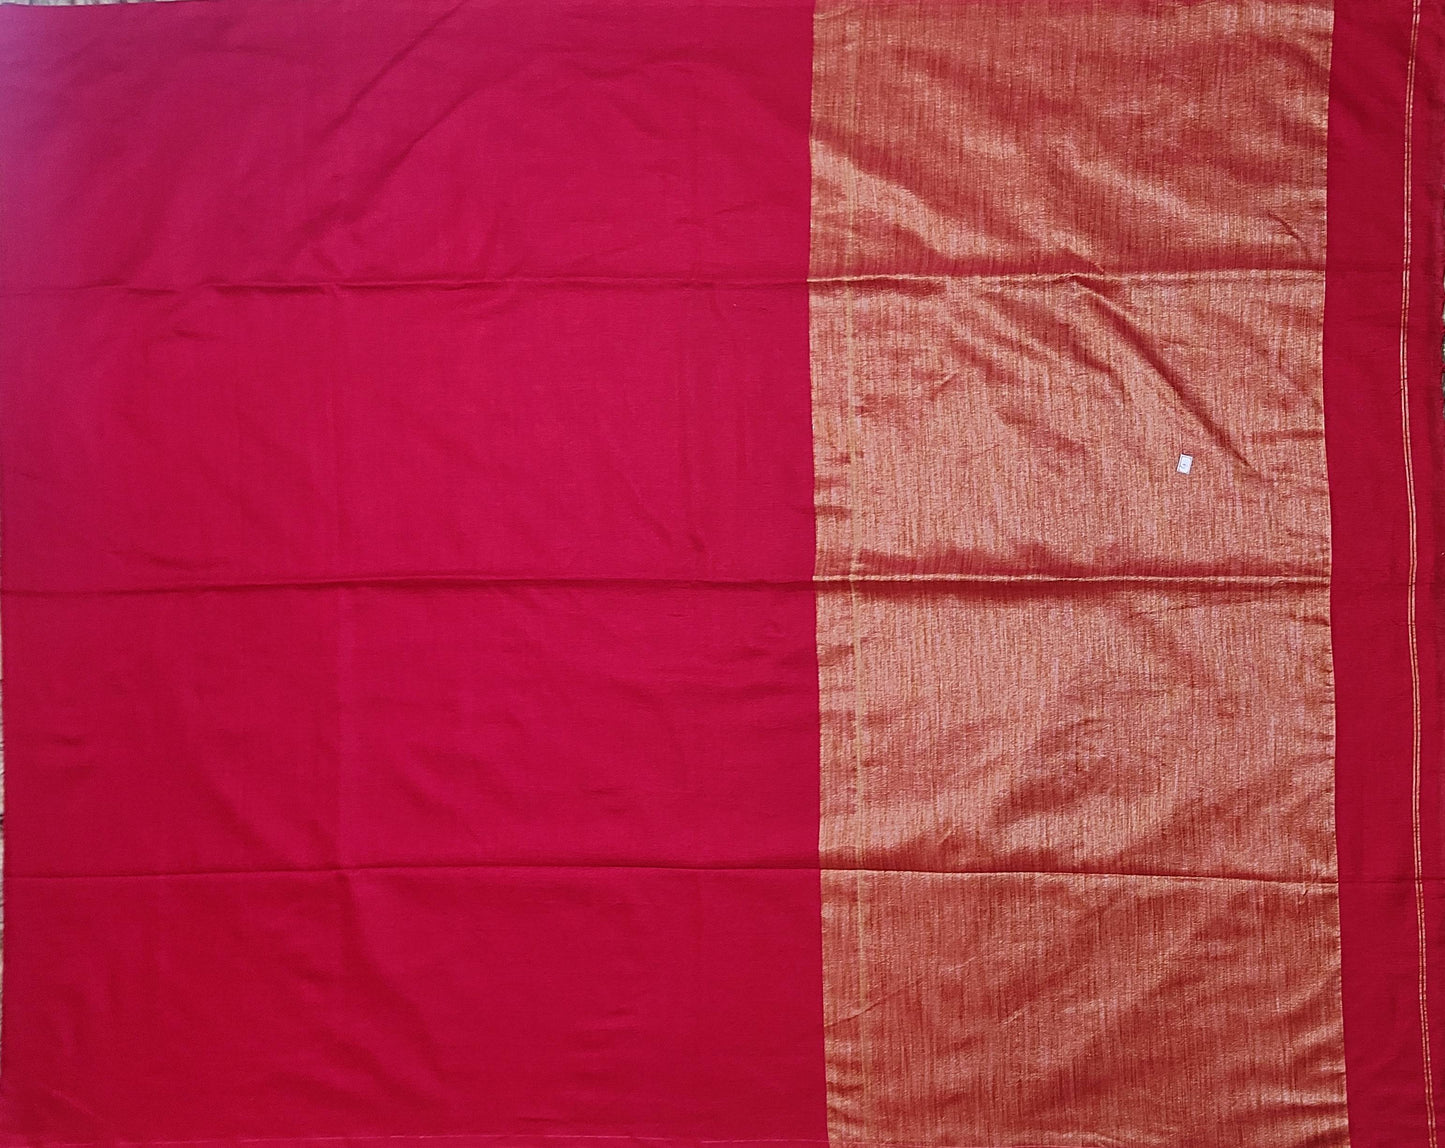 Soft Khadi cotton saree Red color